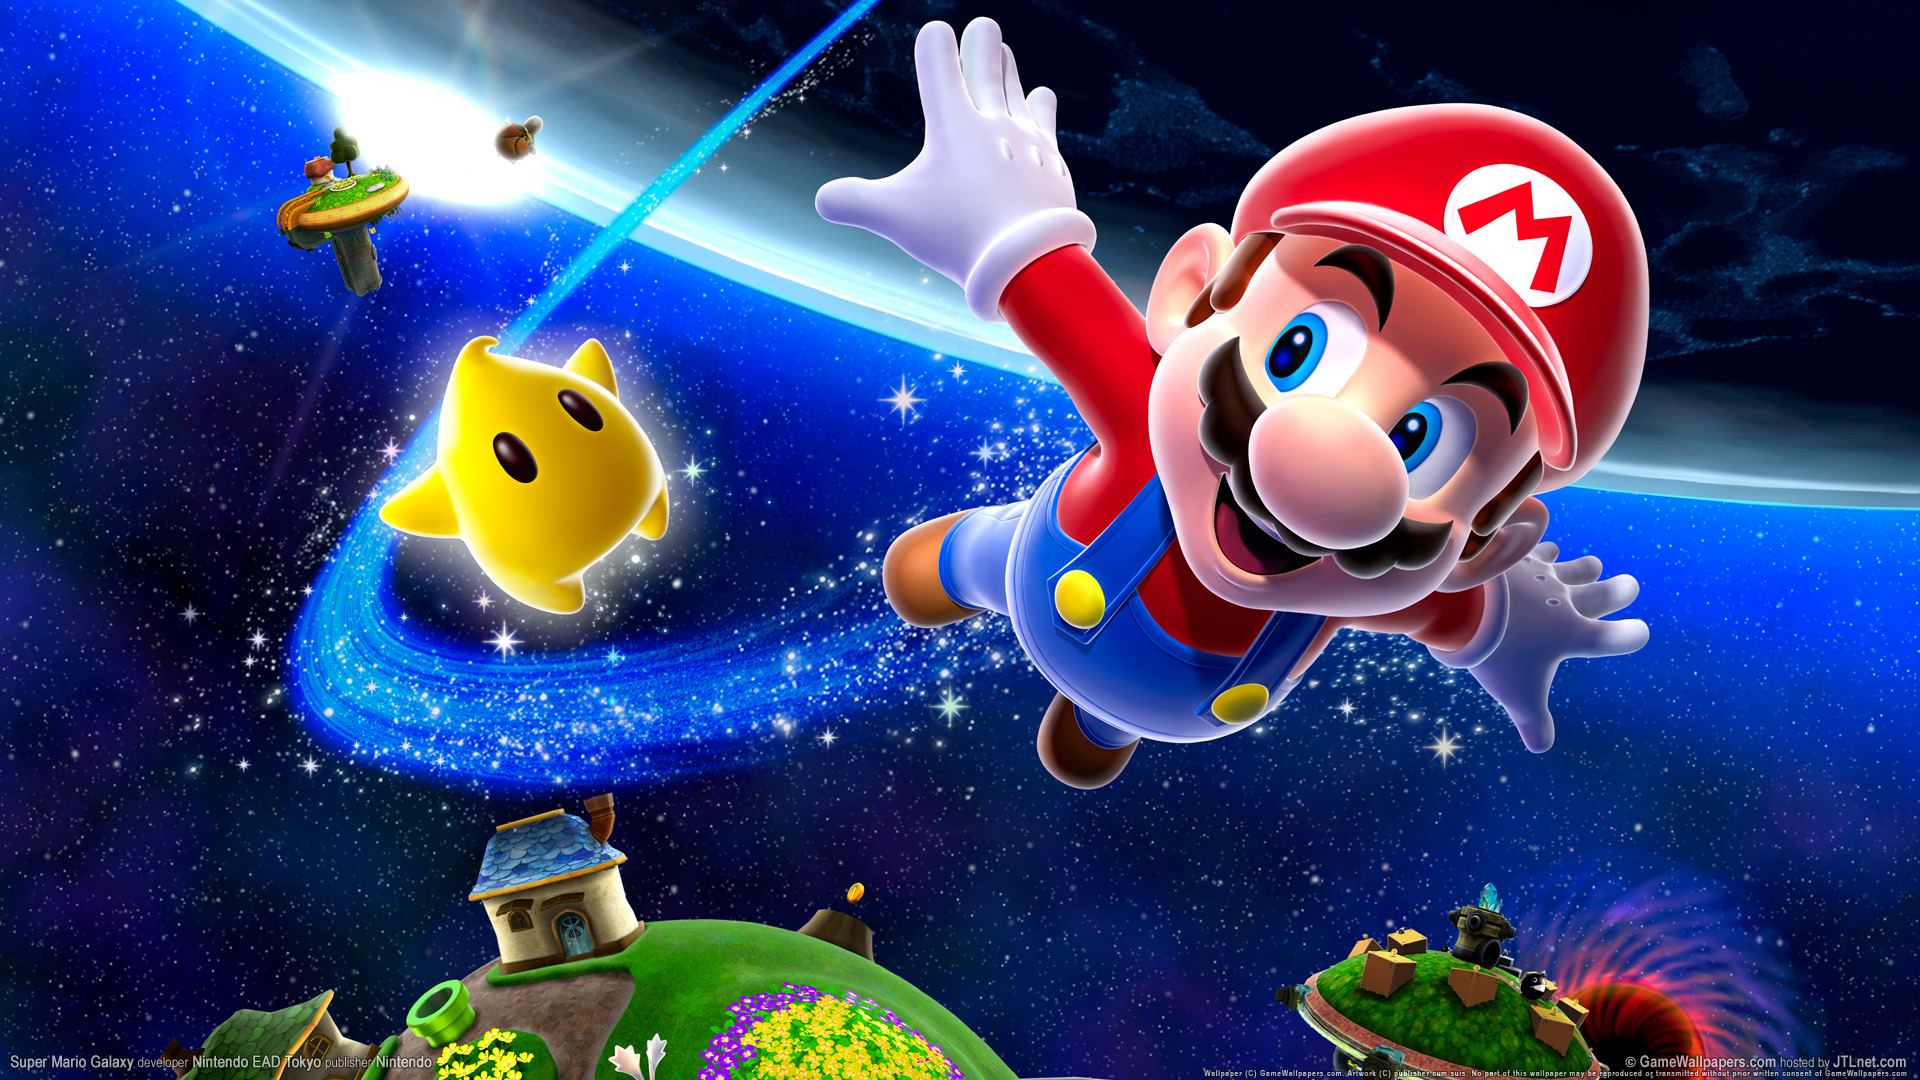 Super Mario Galaxy Backgrounds, Compatible - PC, Mobile, Gadgets| 1920x1080 px